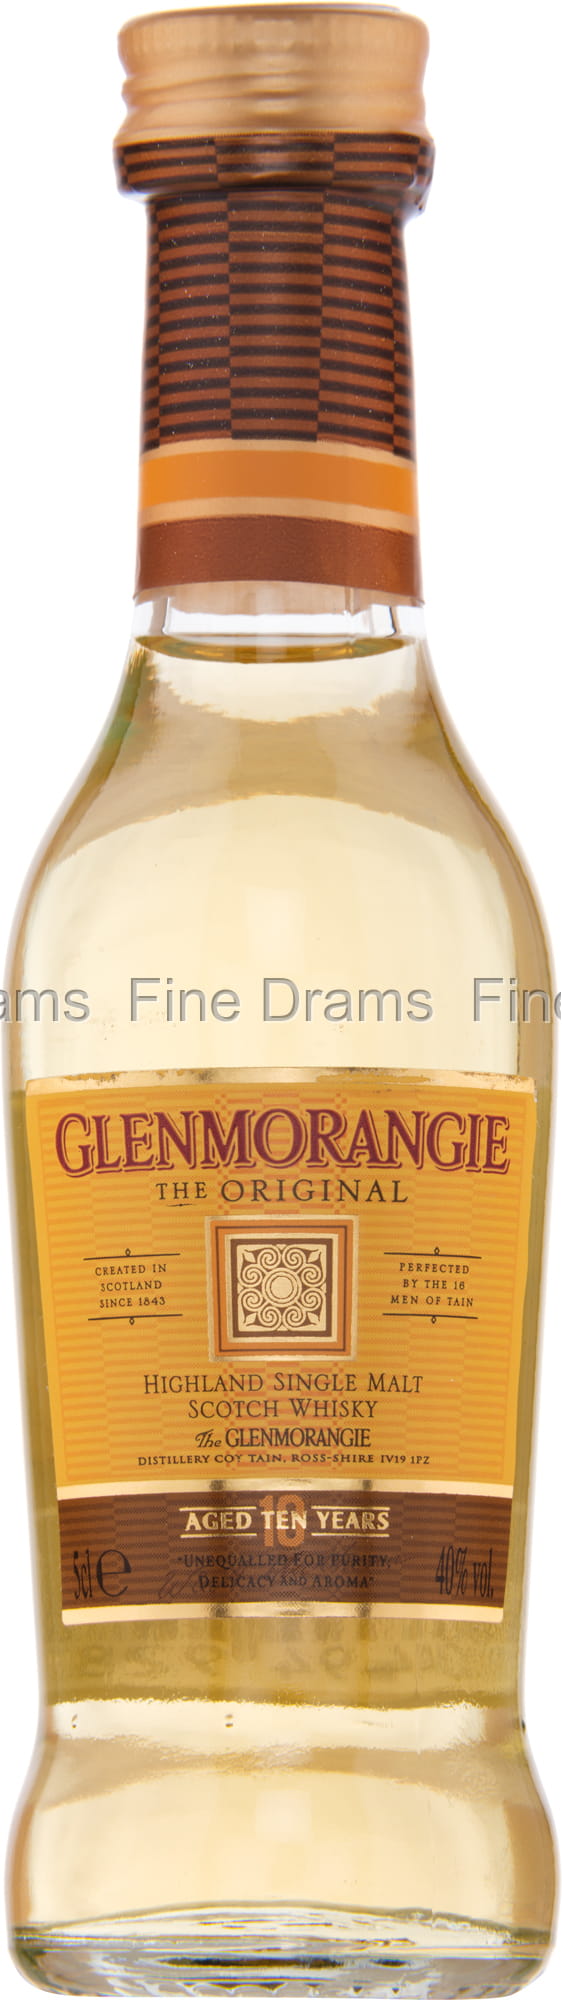 Glenmorangie 10 Year Old The Original Highland Single Malt